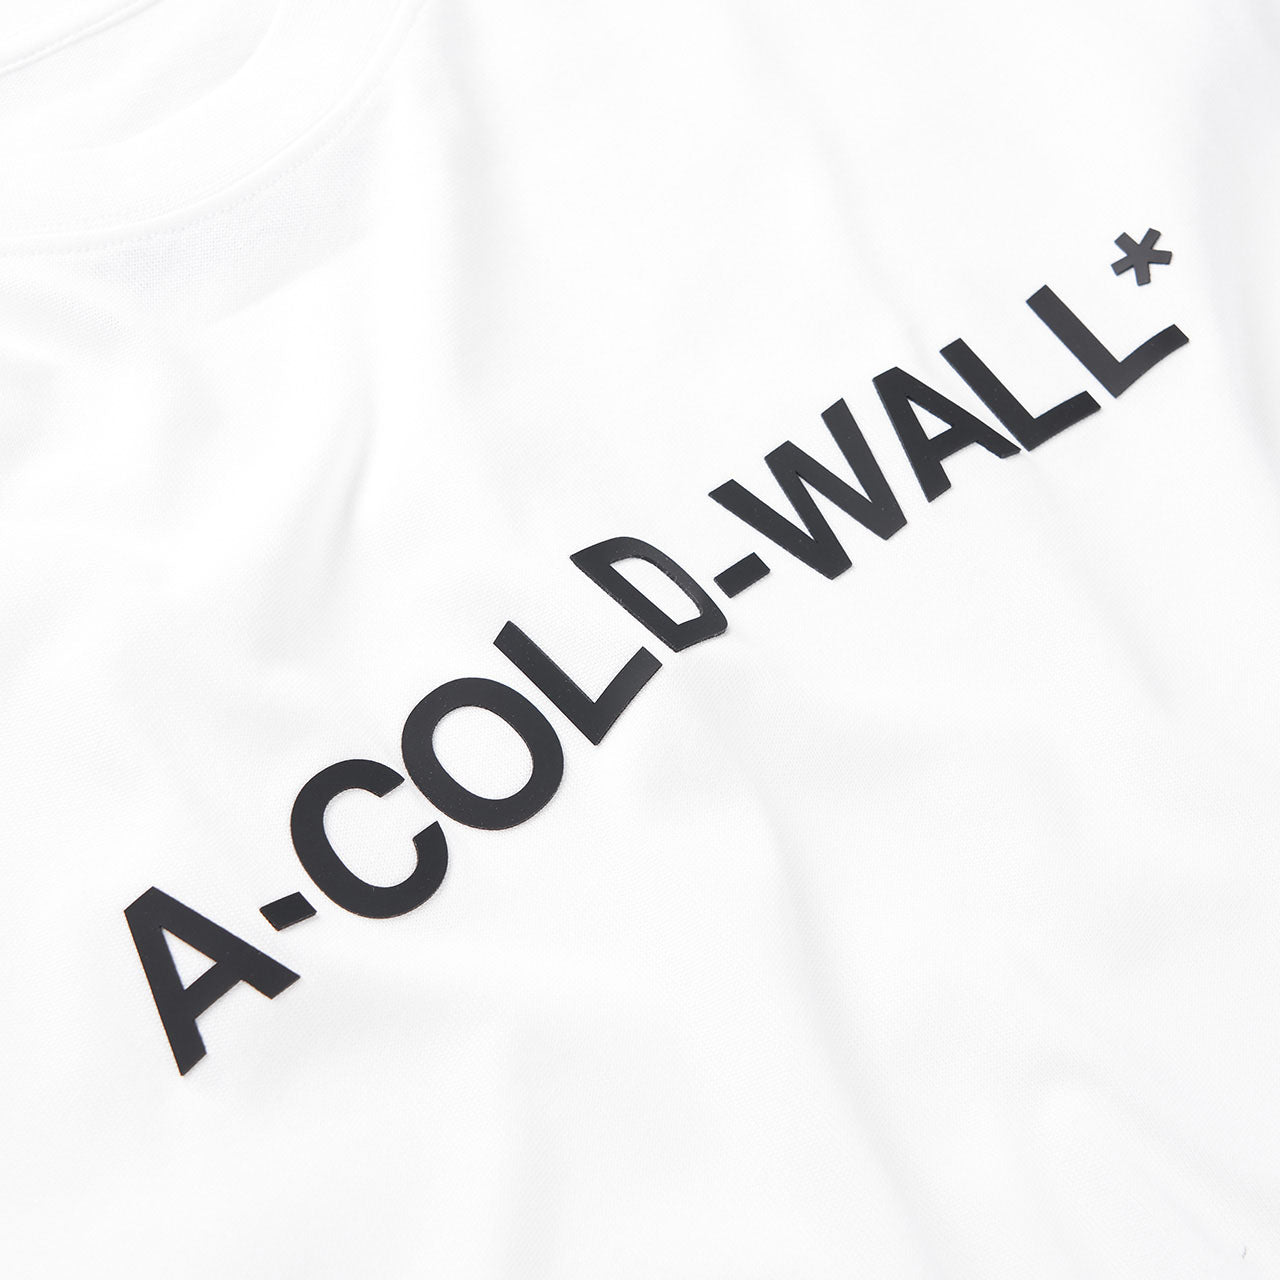 a-cold-wall* essential logo t-shirt (weiß)